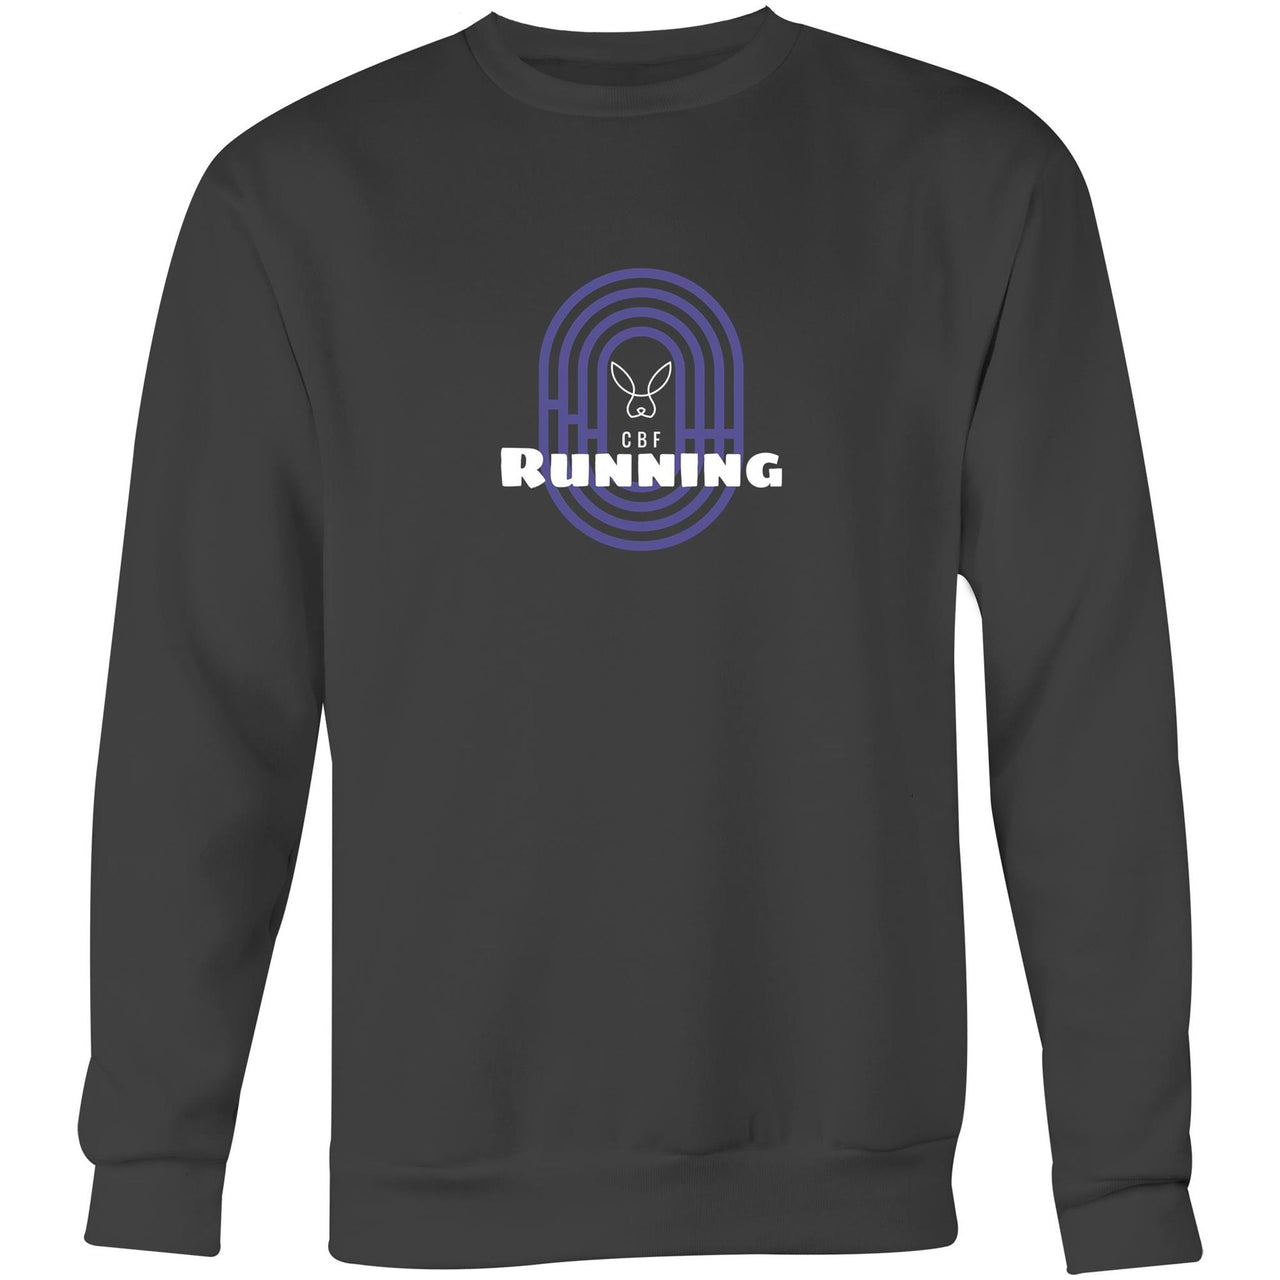 CBF Running Crew Sweatshirt Dark Grey by CBF Clothing